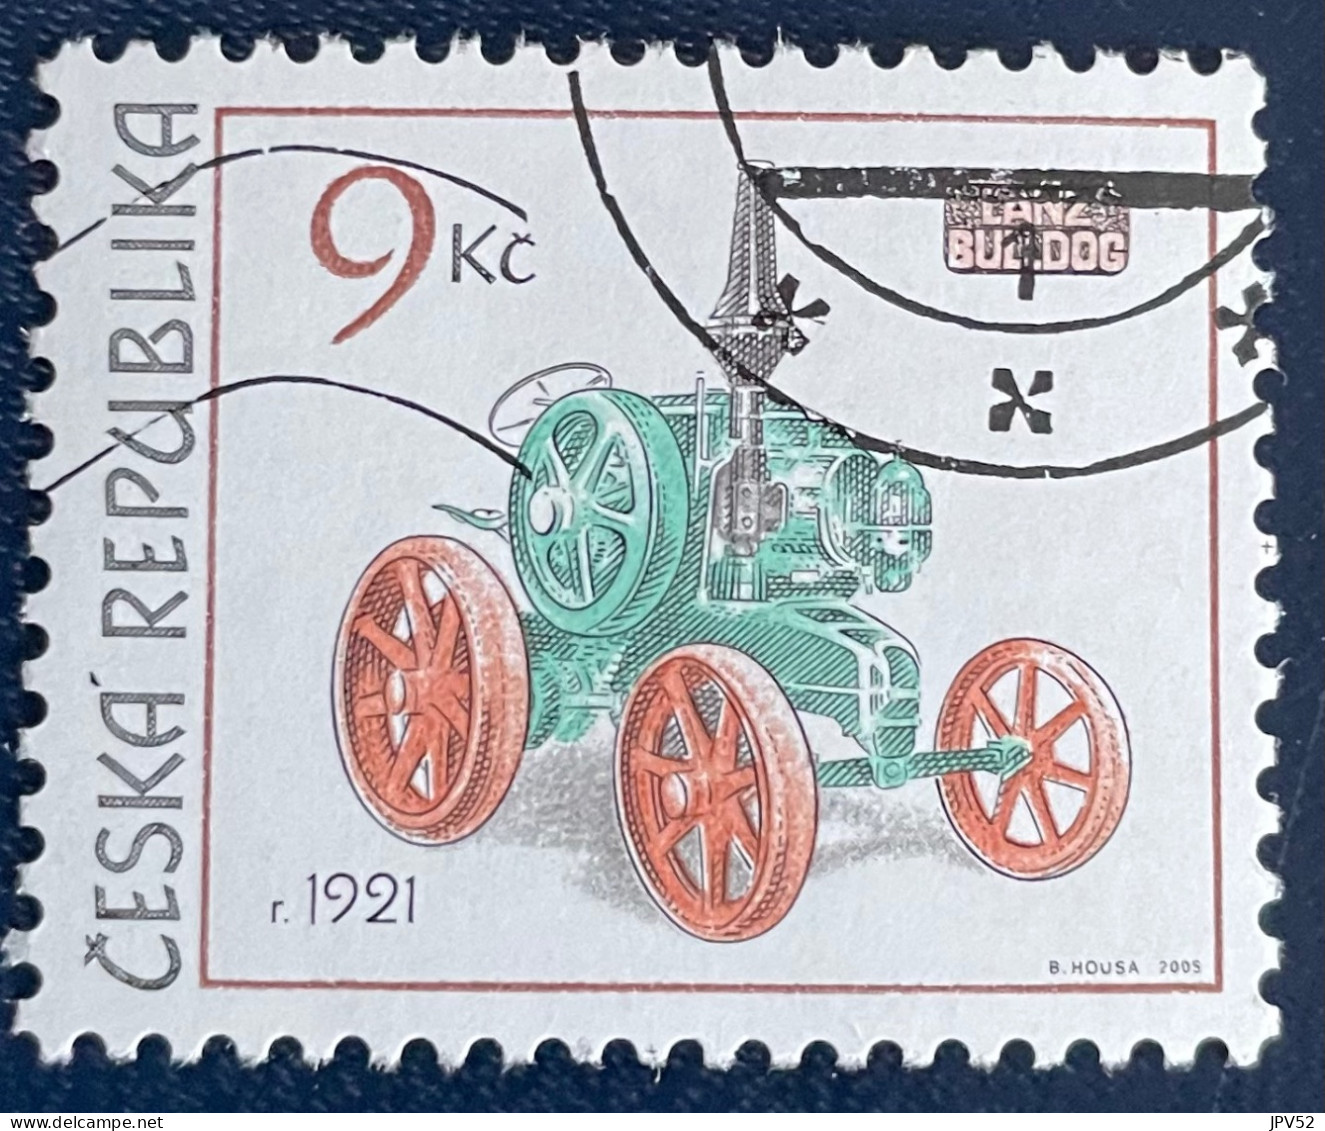 Ceska Republika - Tsjechië - C4/6 - 2005 - (°)used - Michel 447 - Oude Tractoren - Gebraucht